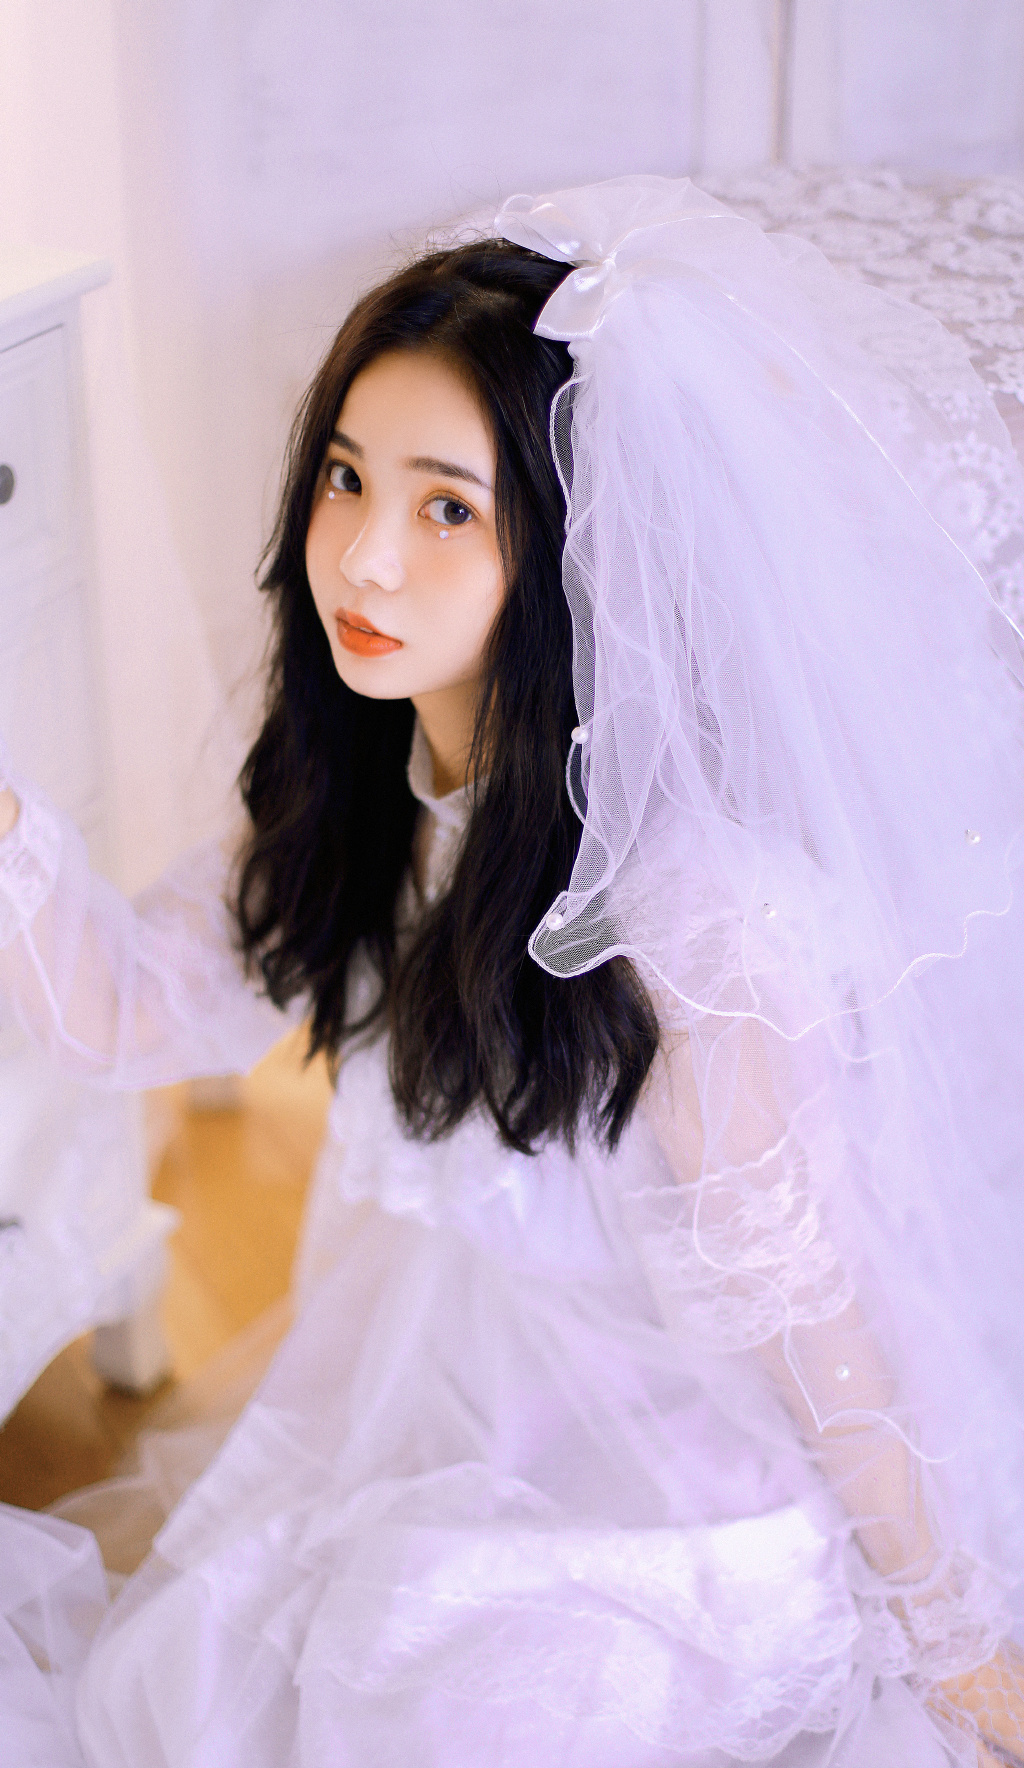 ShiniUni 婚纱礼服，迪士尼公主系列 - ShiniUni婚纱礼服高级定制设计 - 设计师品牌